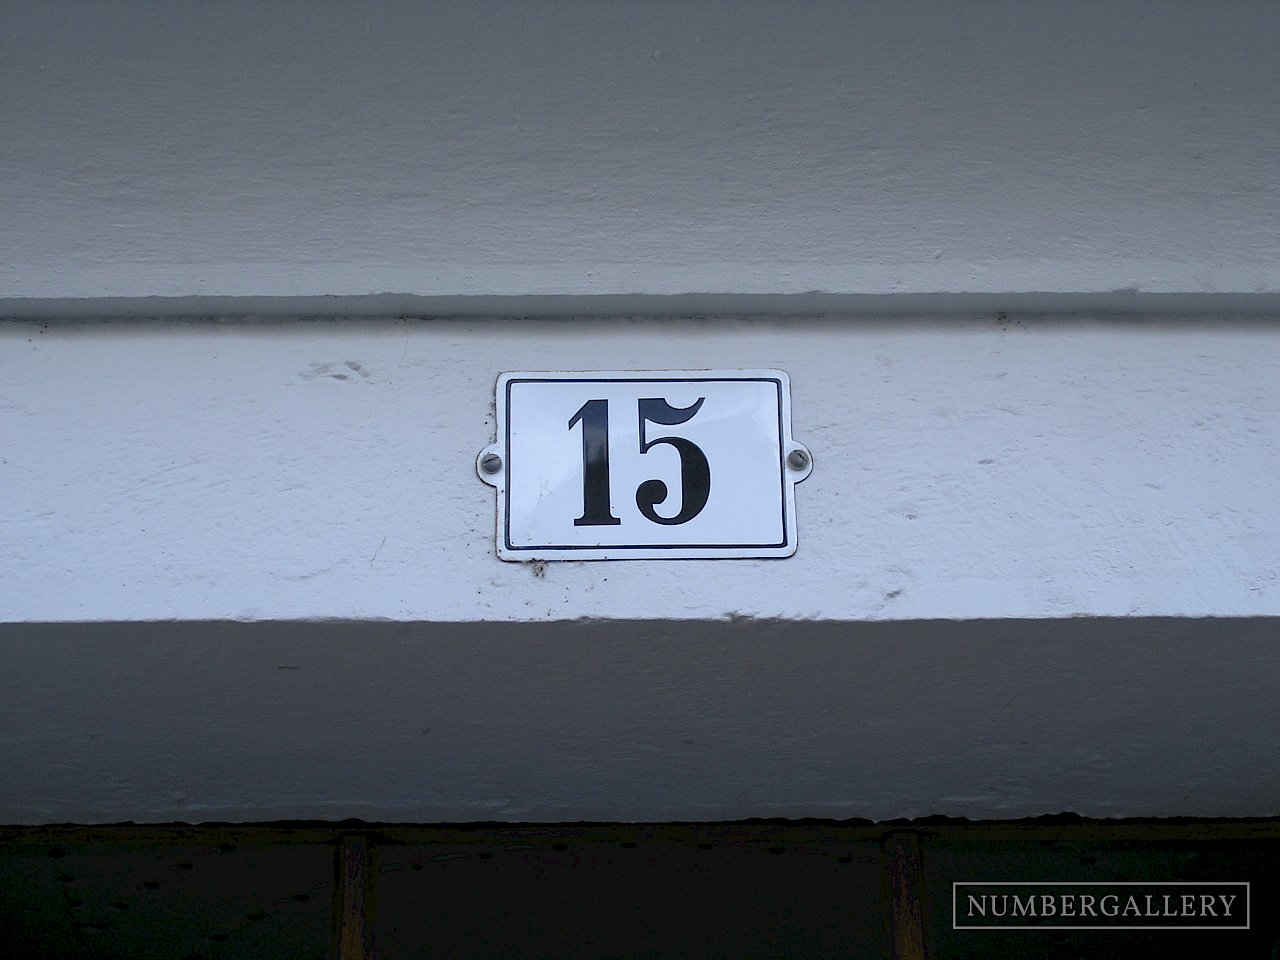 Hausnummer in Solothurn